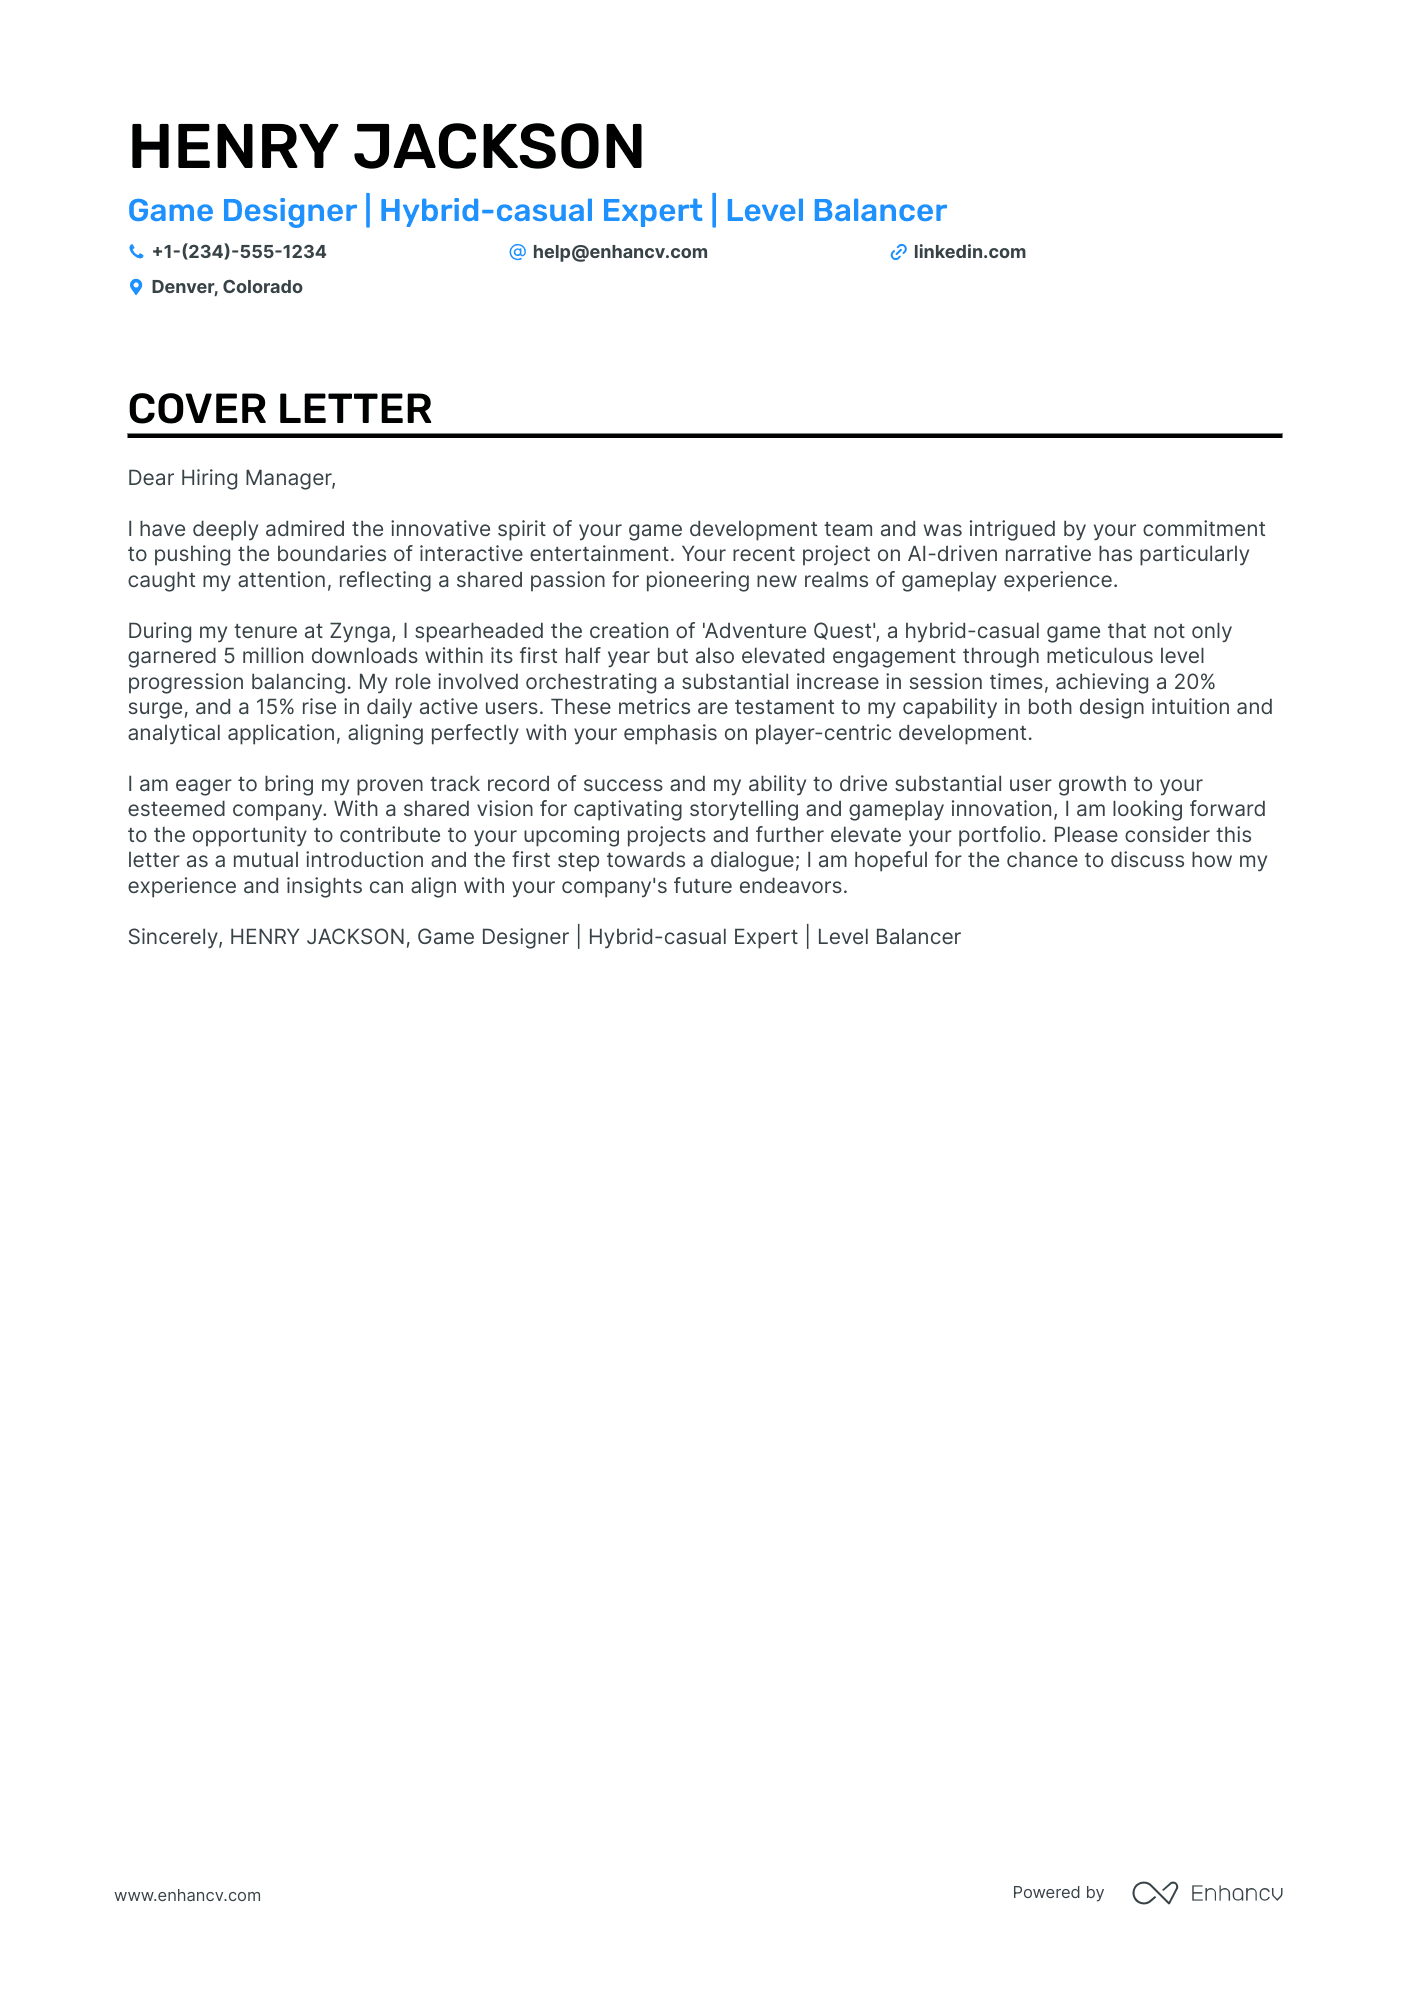 Game Designer cover letter